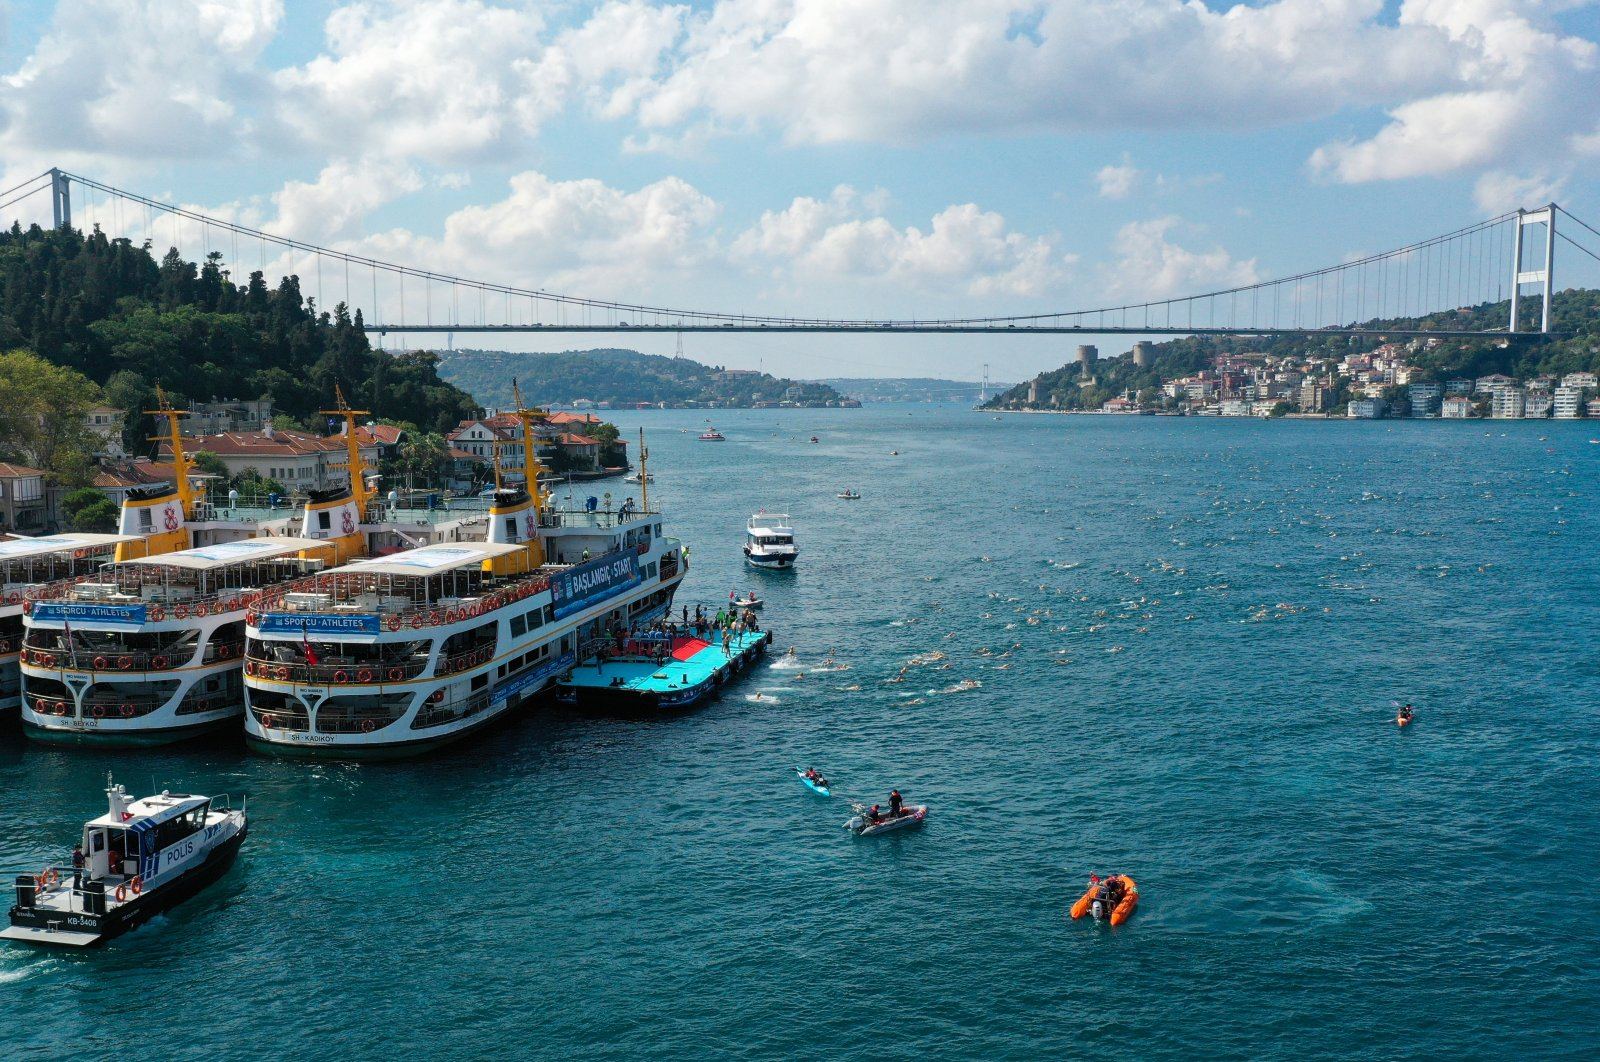 Istanbul hosts 32nd Bosporus Cross-Continental Swimming Race